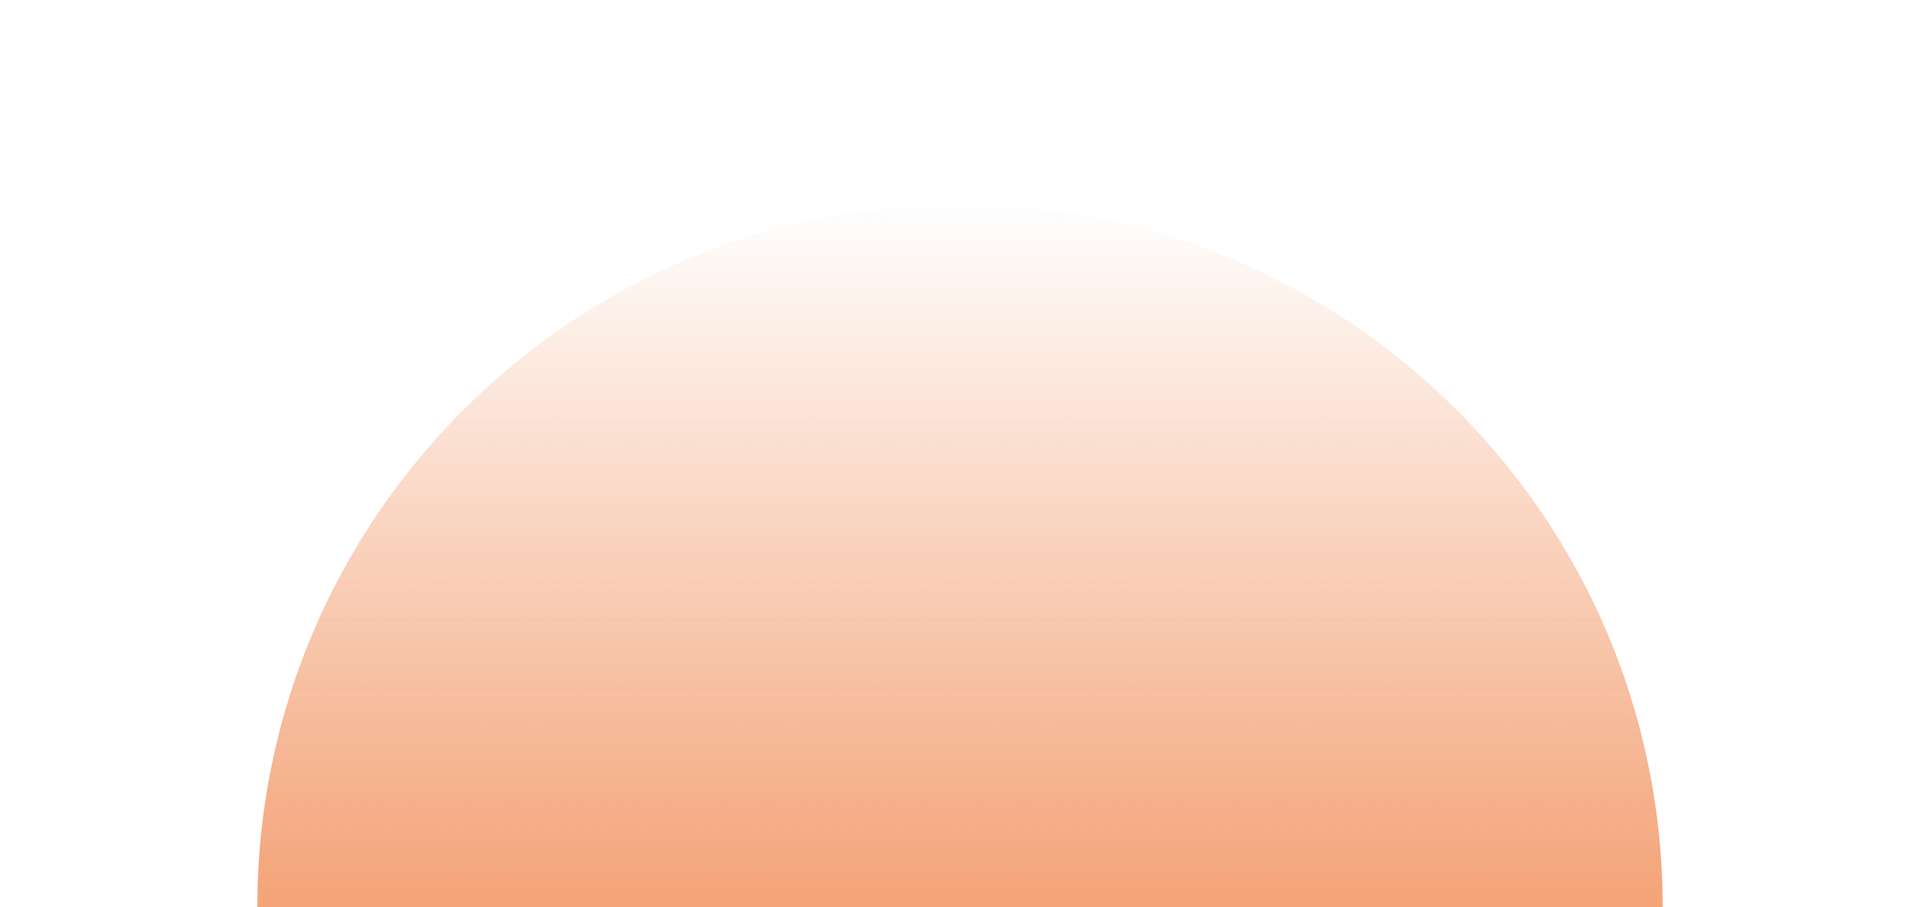 Halbkreis in Orange